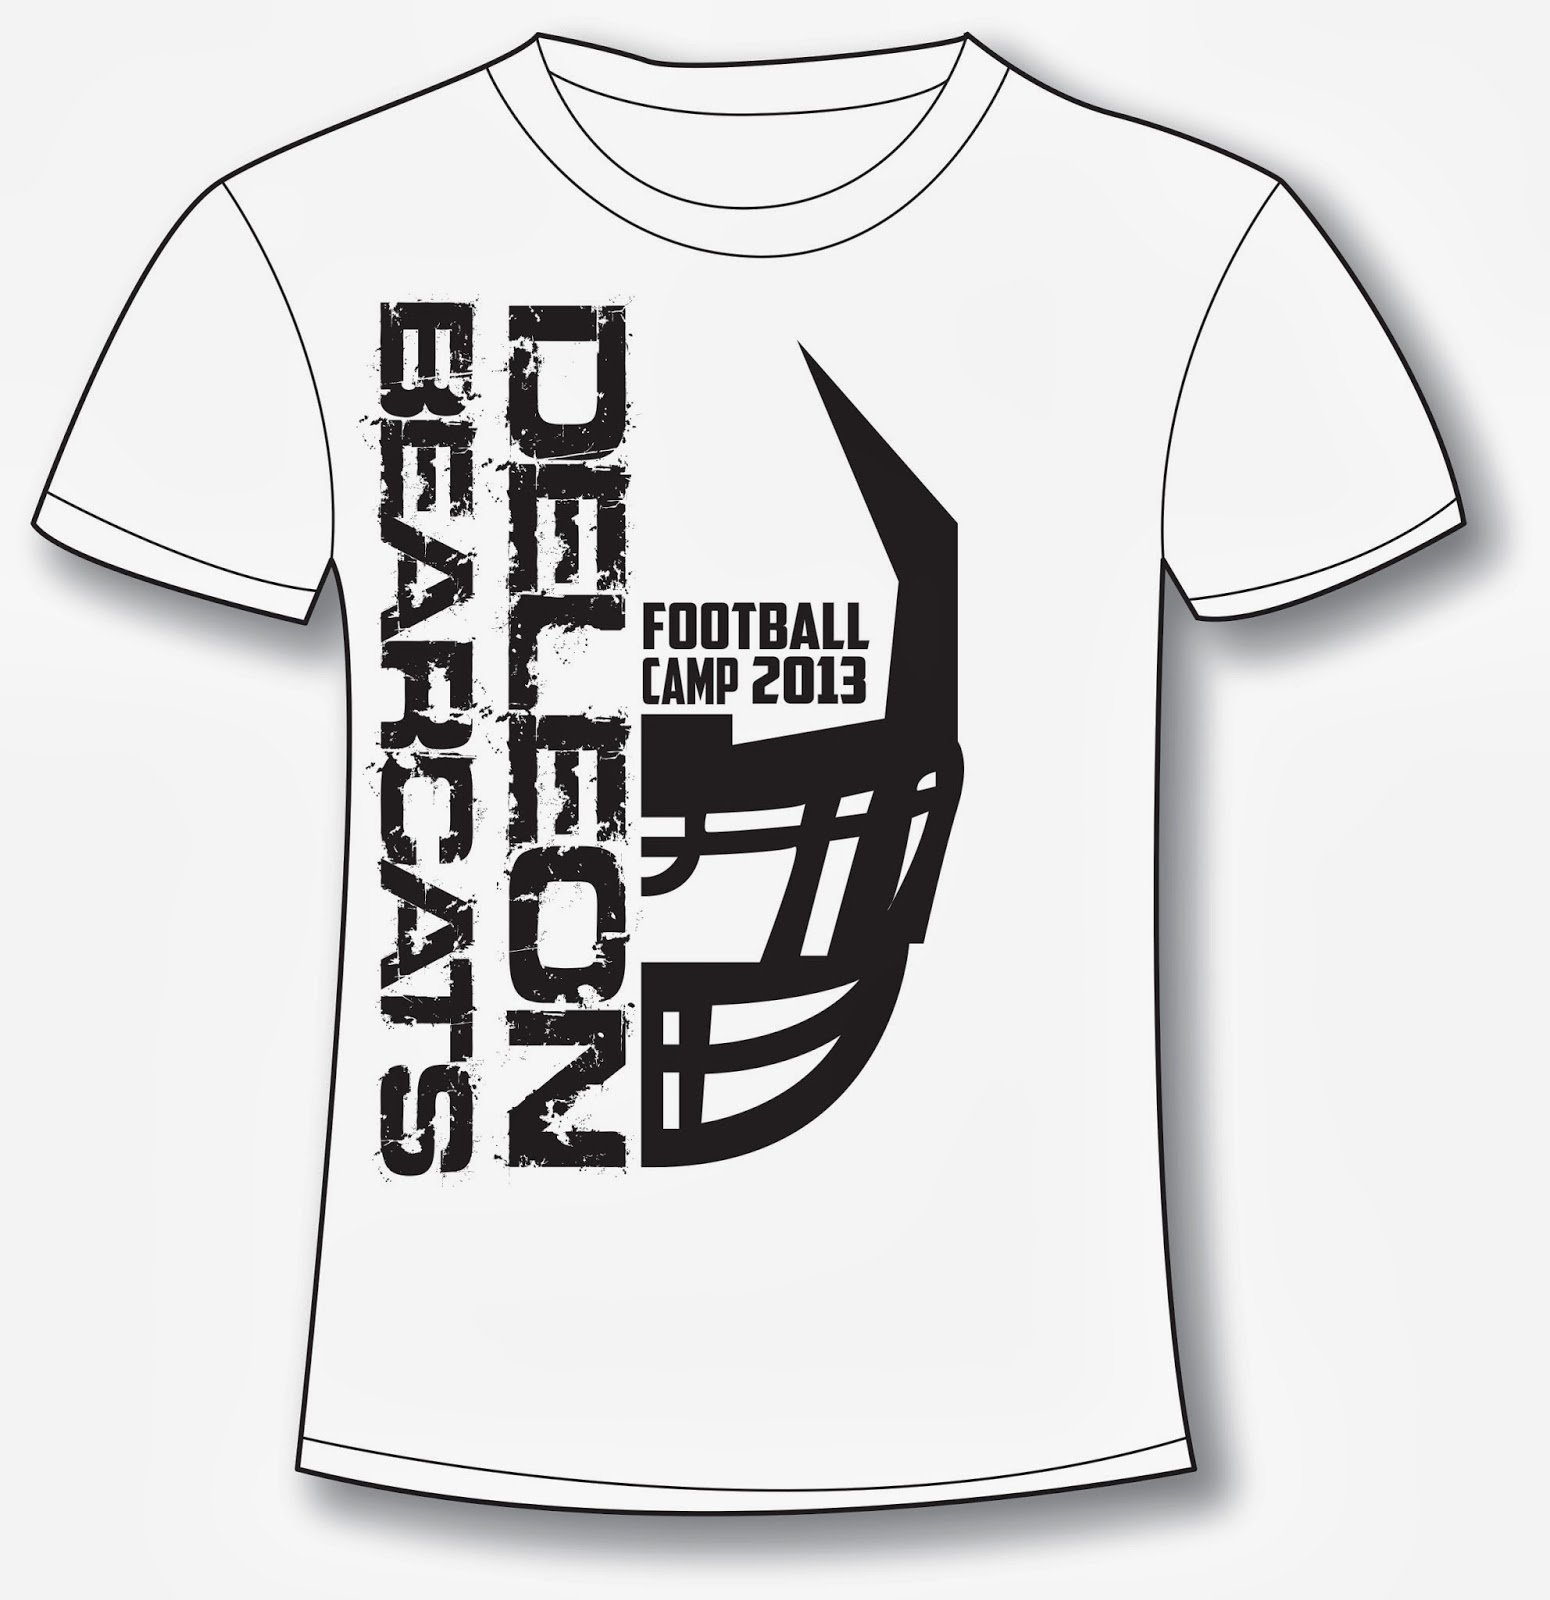 10 Gorgeous Homecoming T Shirt Design Ideas football t shirt design ideas best home design fantasyfantasywild 1 2022